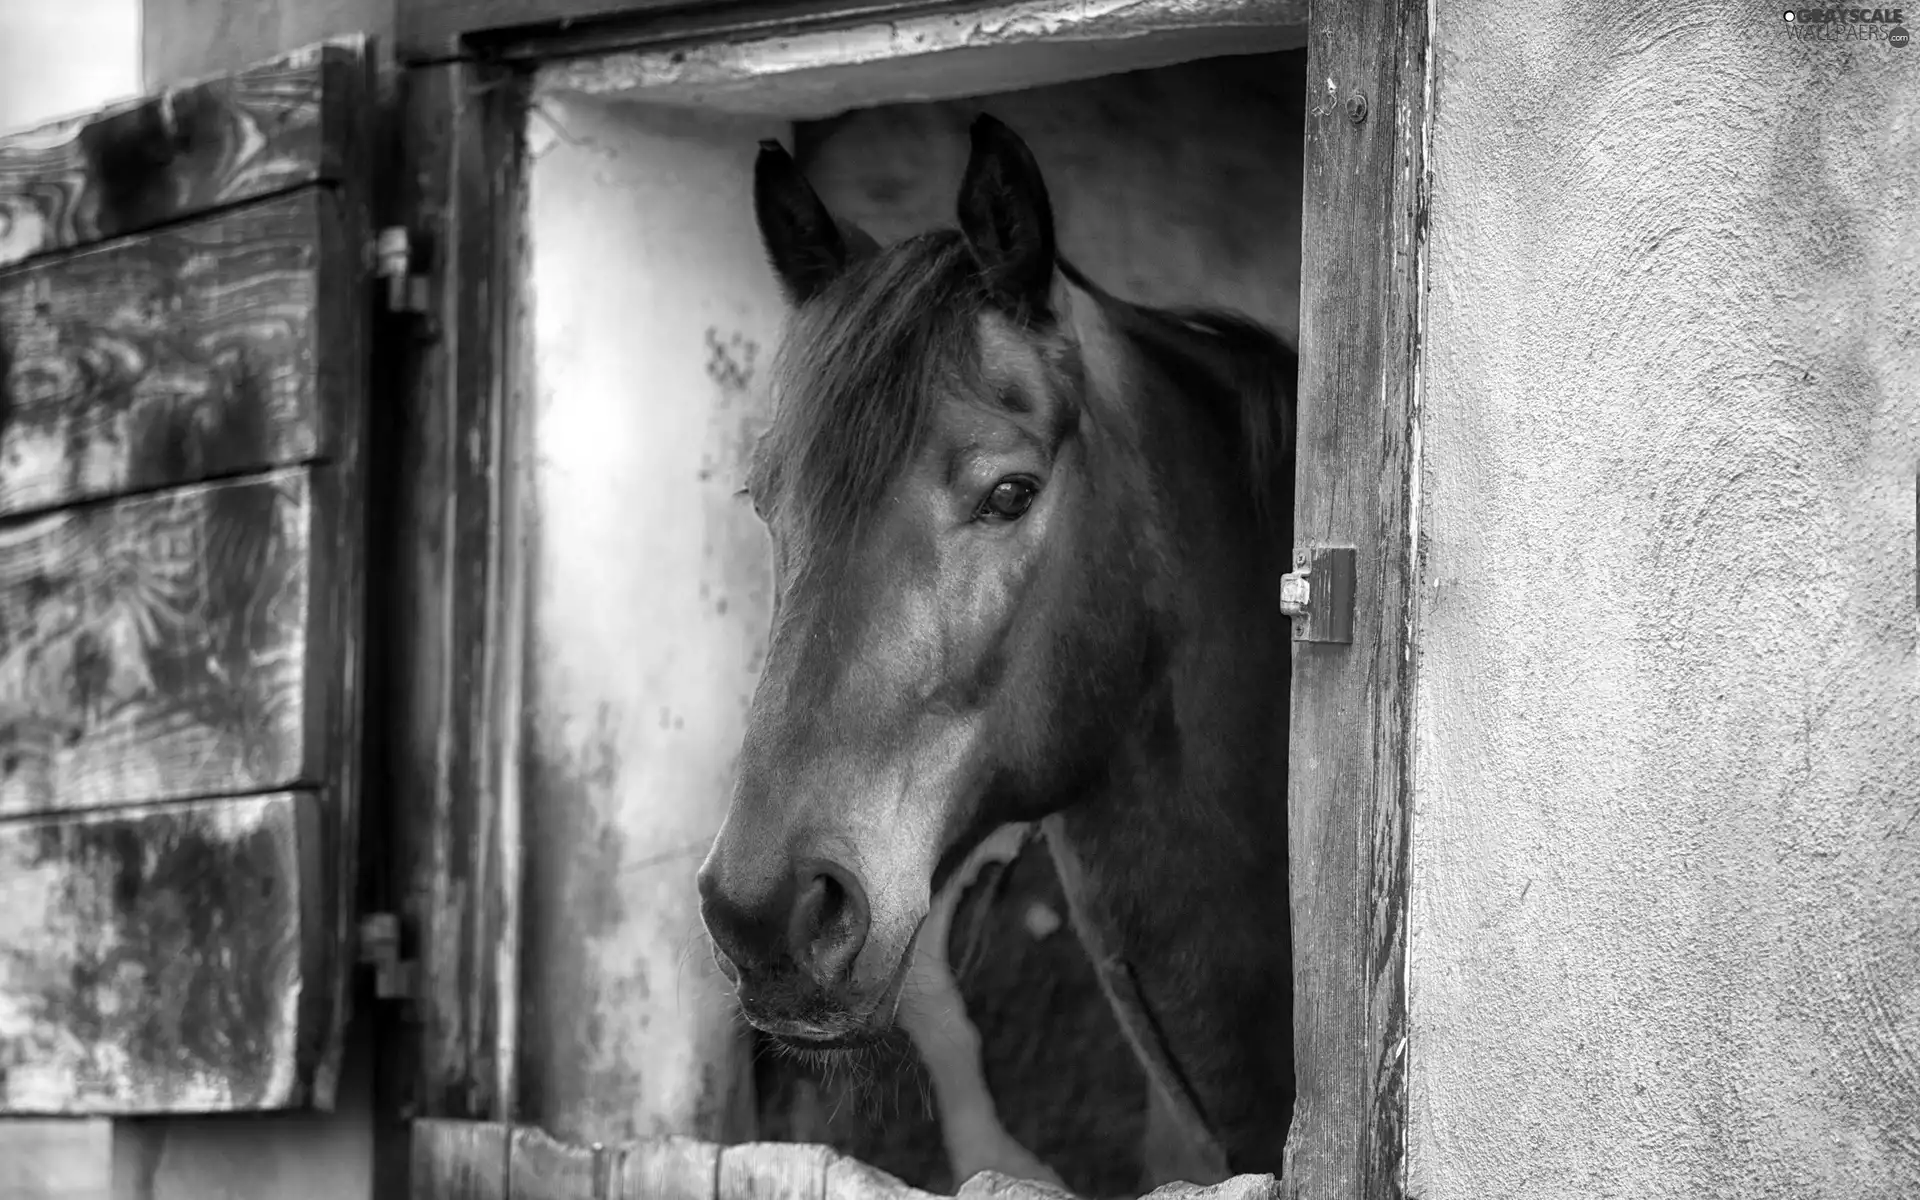 Horse, window